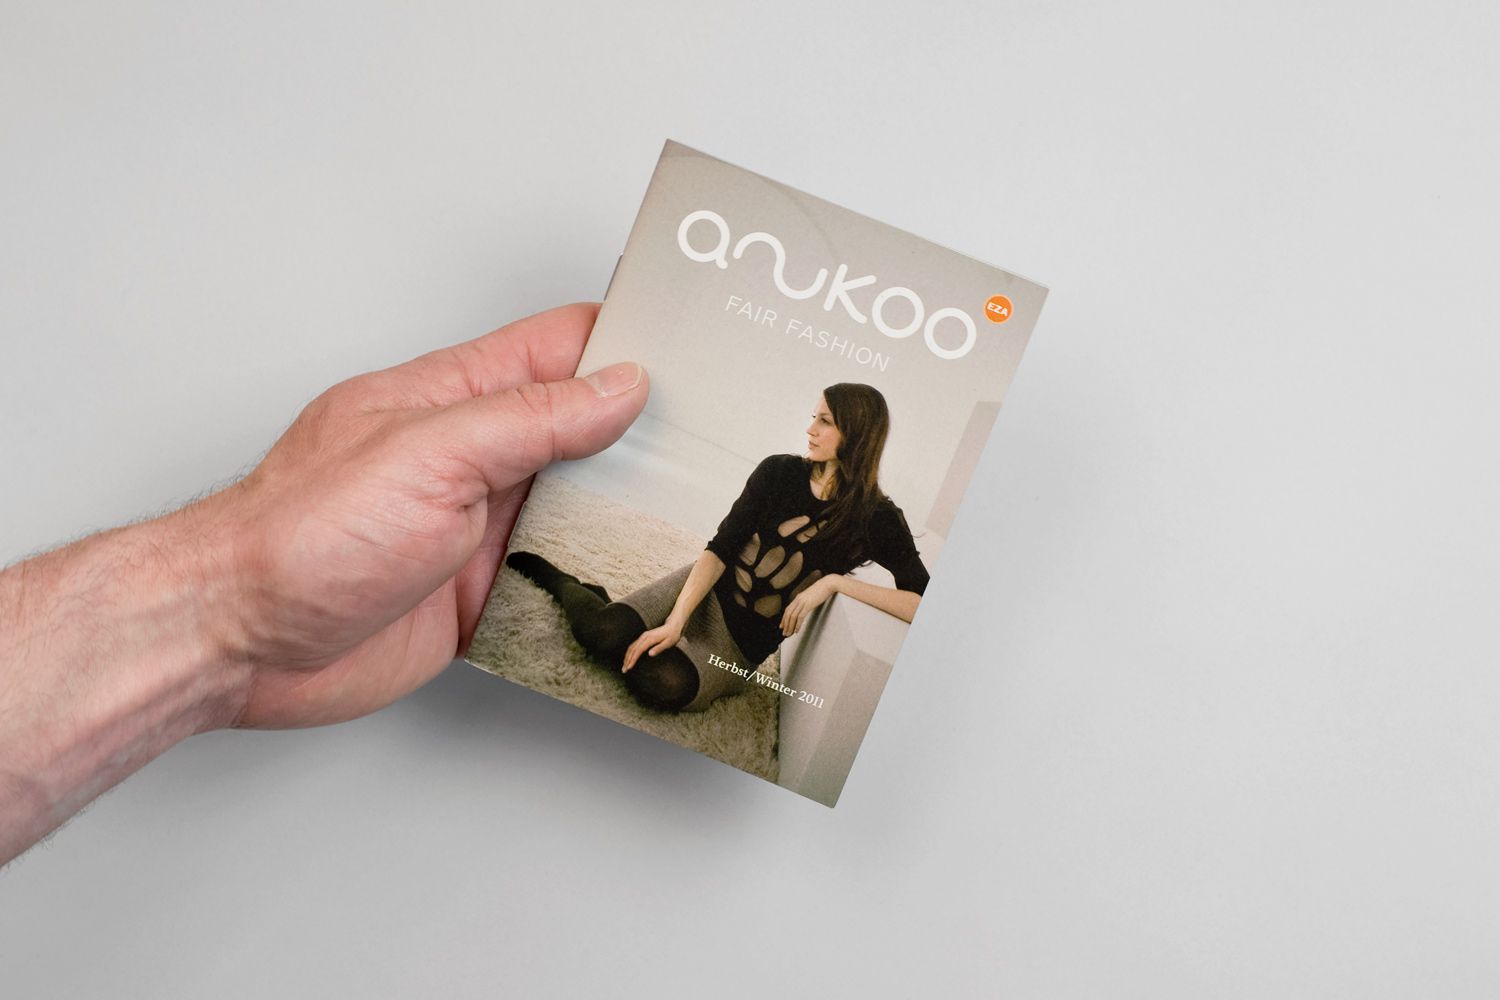 Anukoo Broschuere Cover